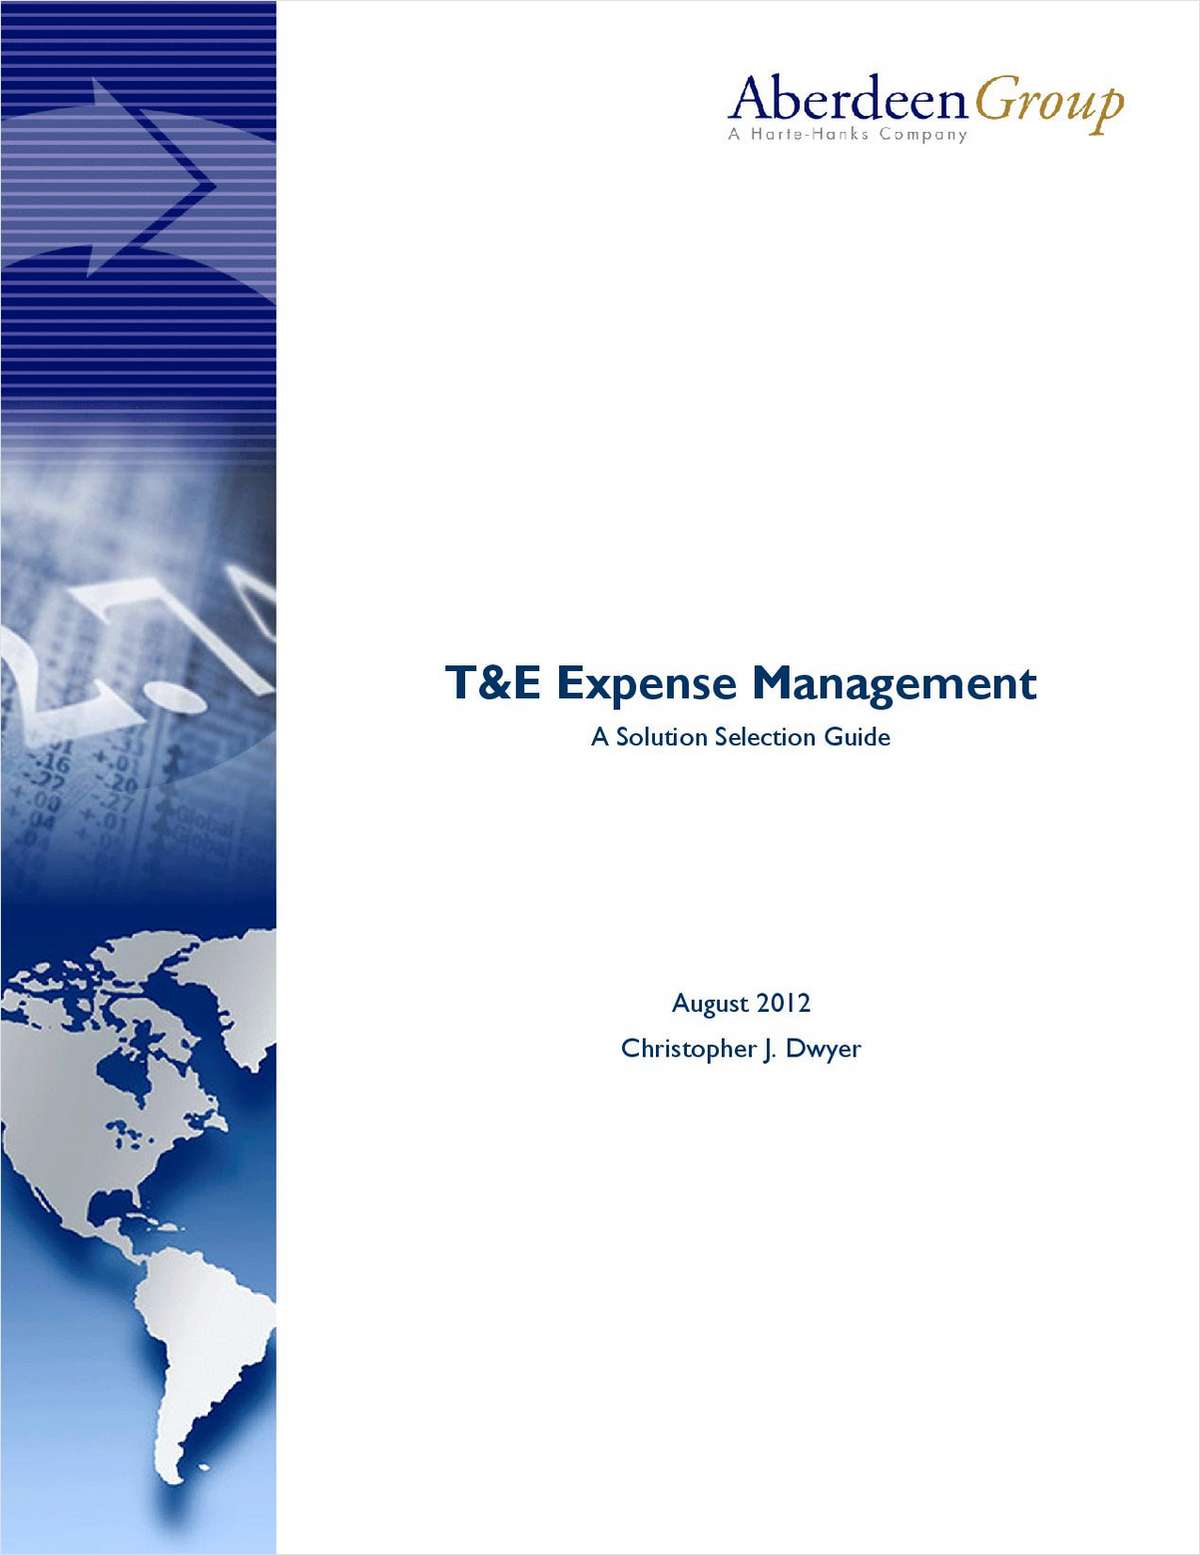 T&E Expense Management: A Solution Selection Guide